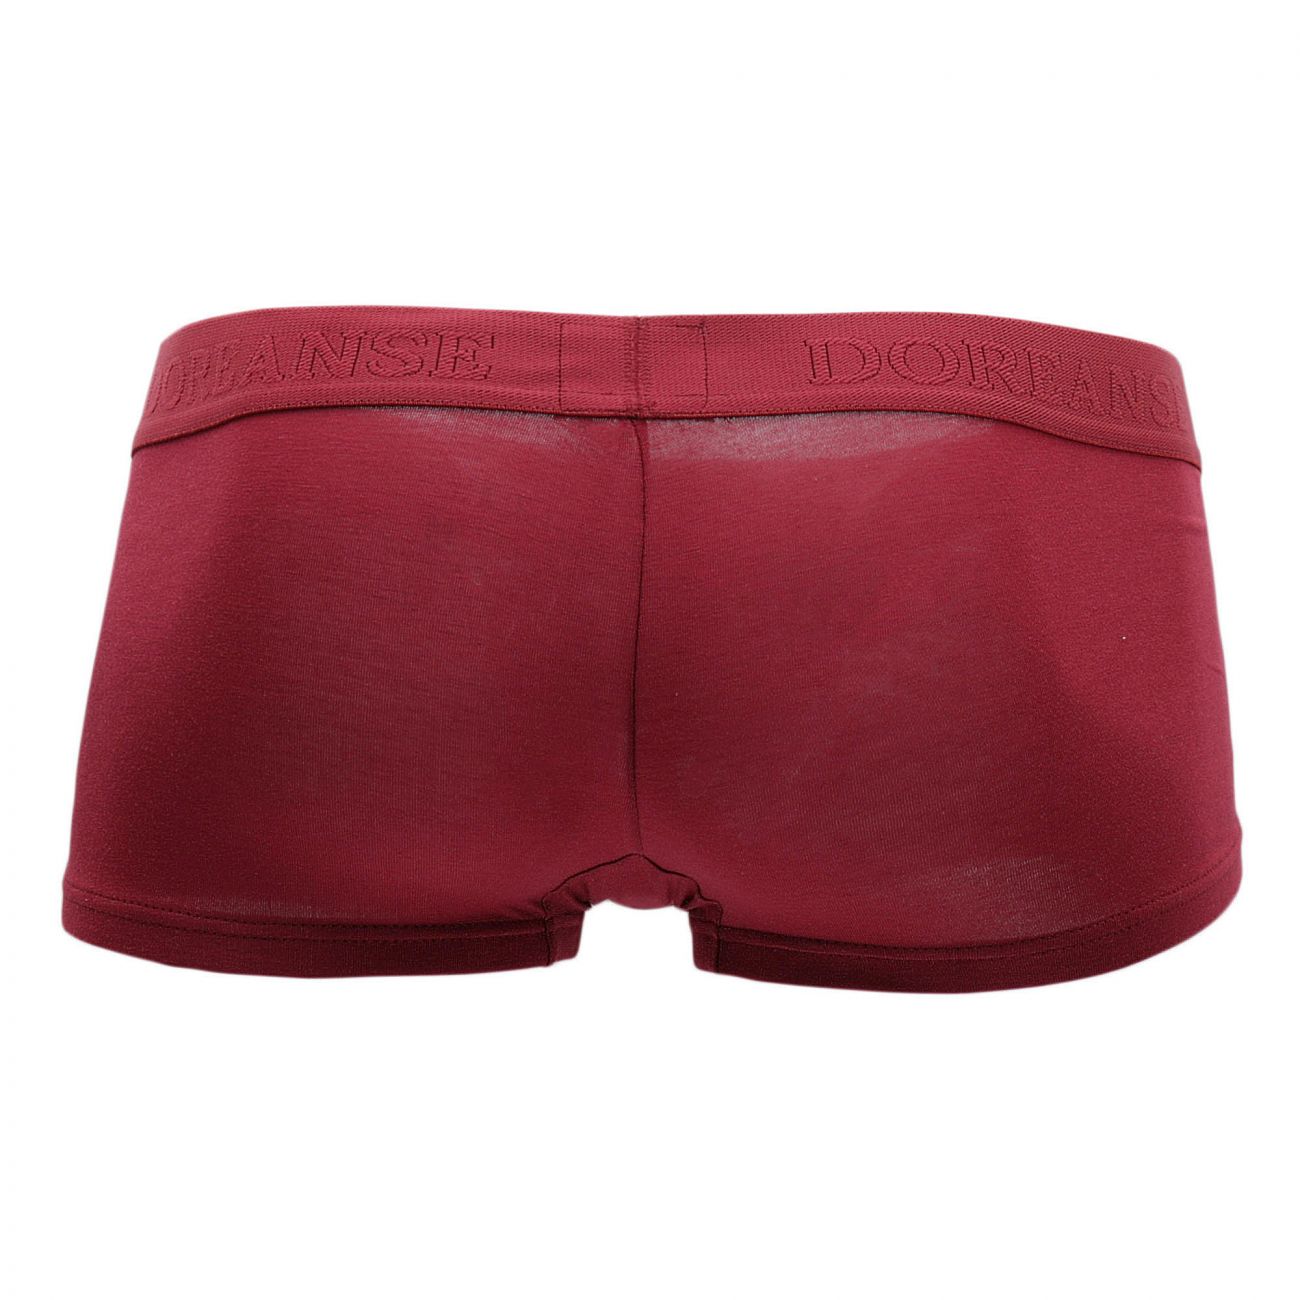 Mens Underwear: Doreanse 1760-BRD Low-rise Trunk | eBay